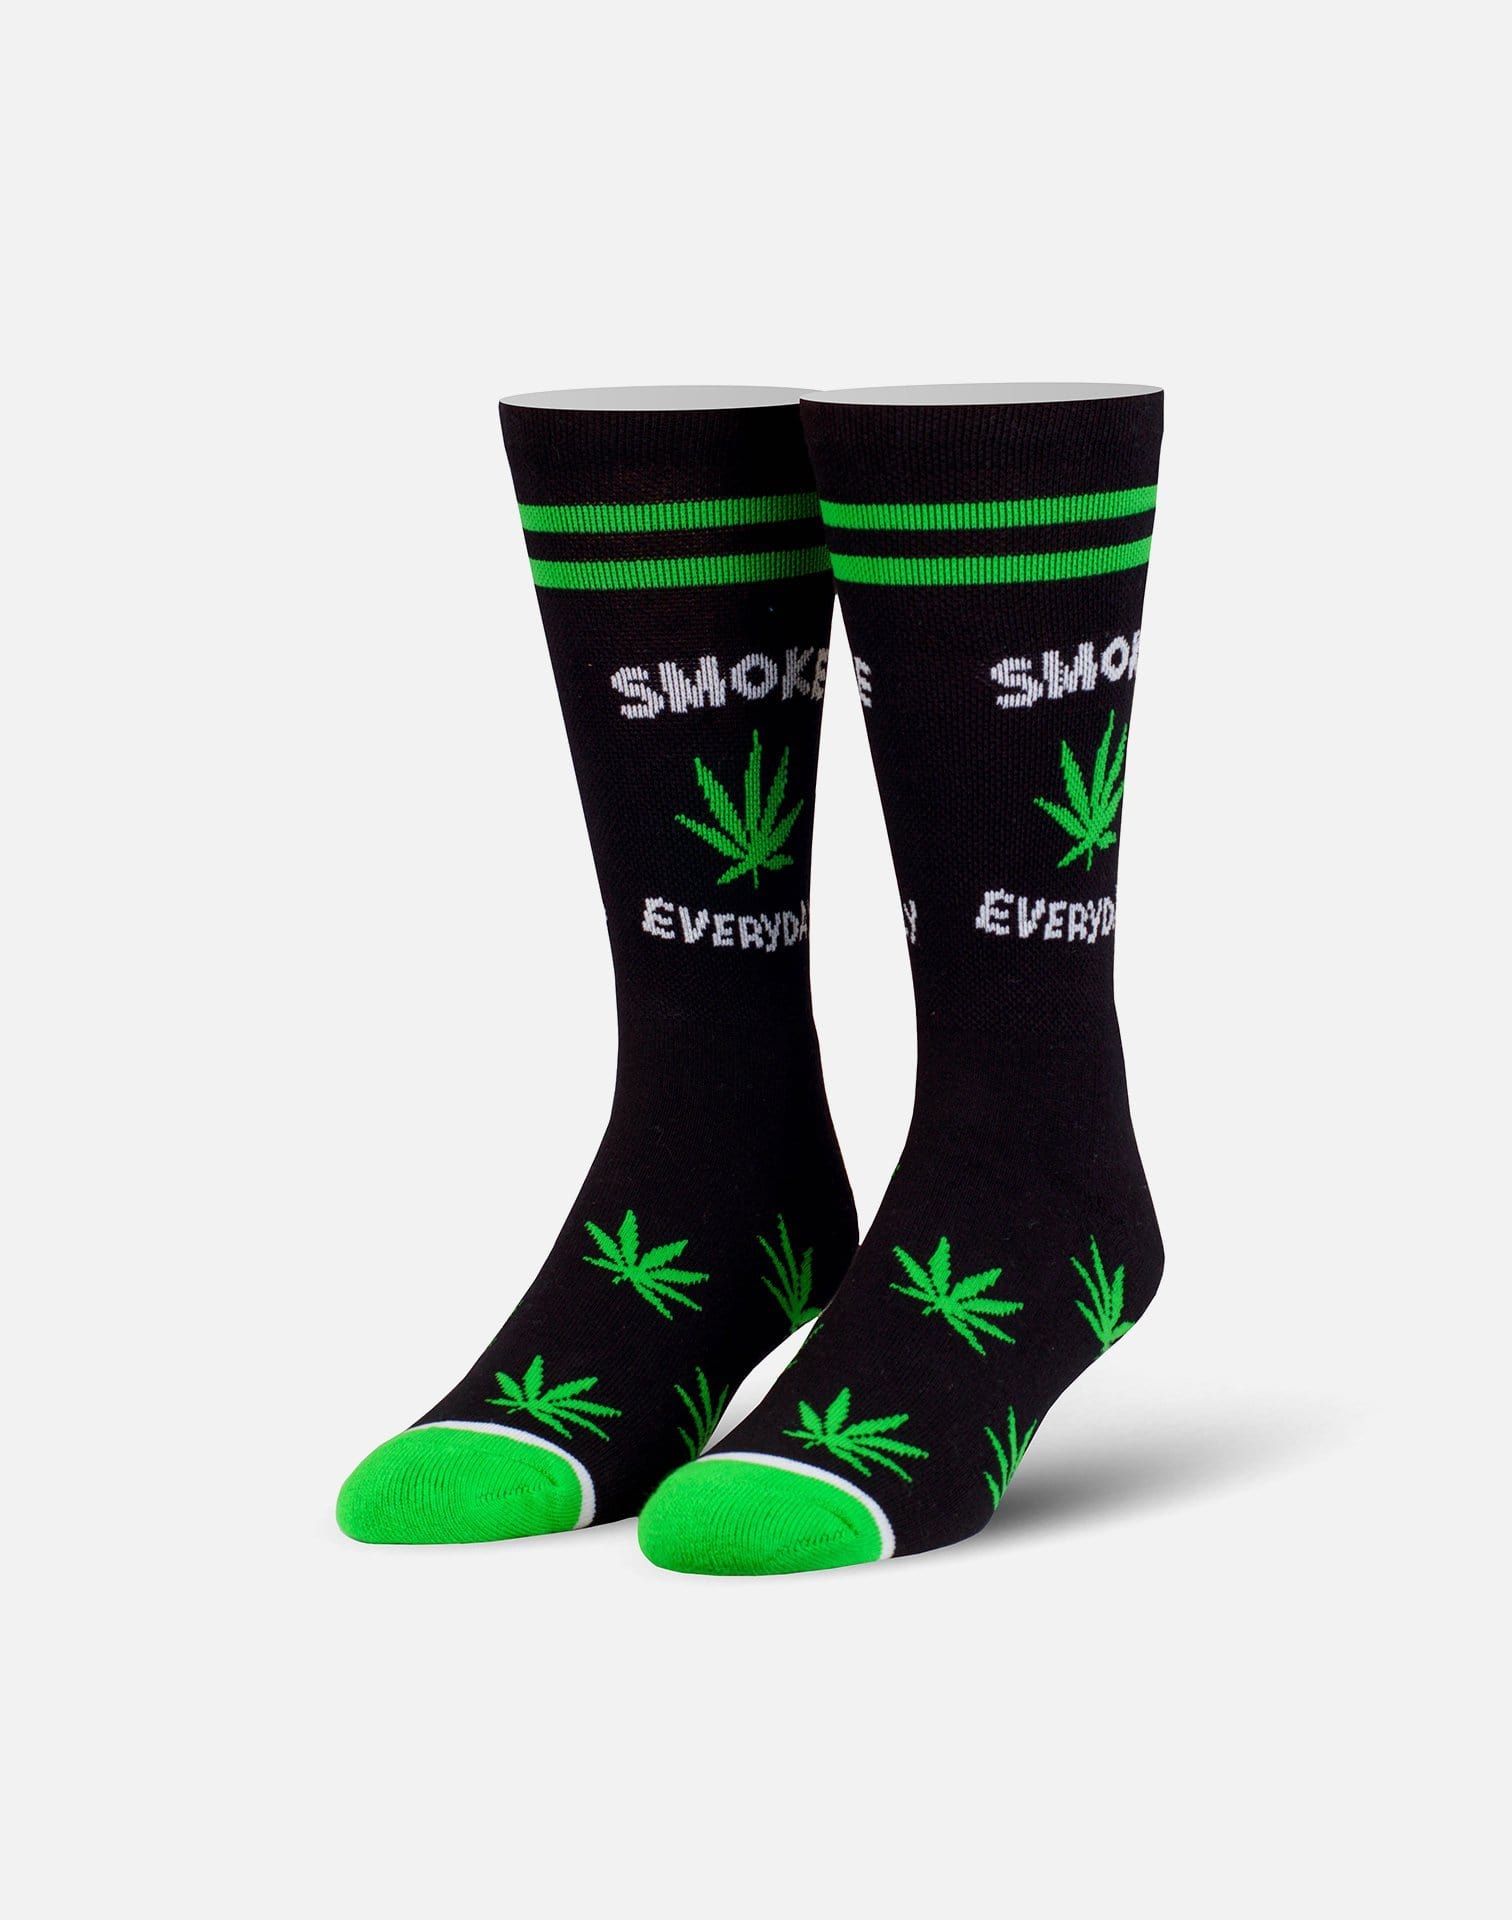 Odd Sox Smoke Everyday Socks